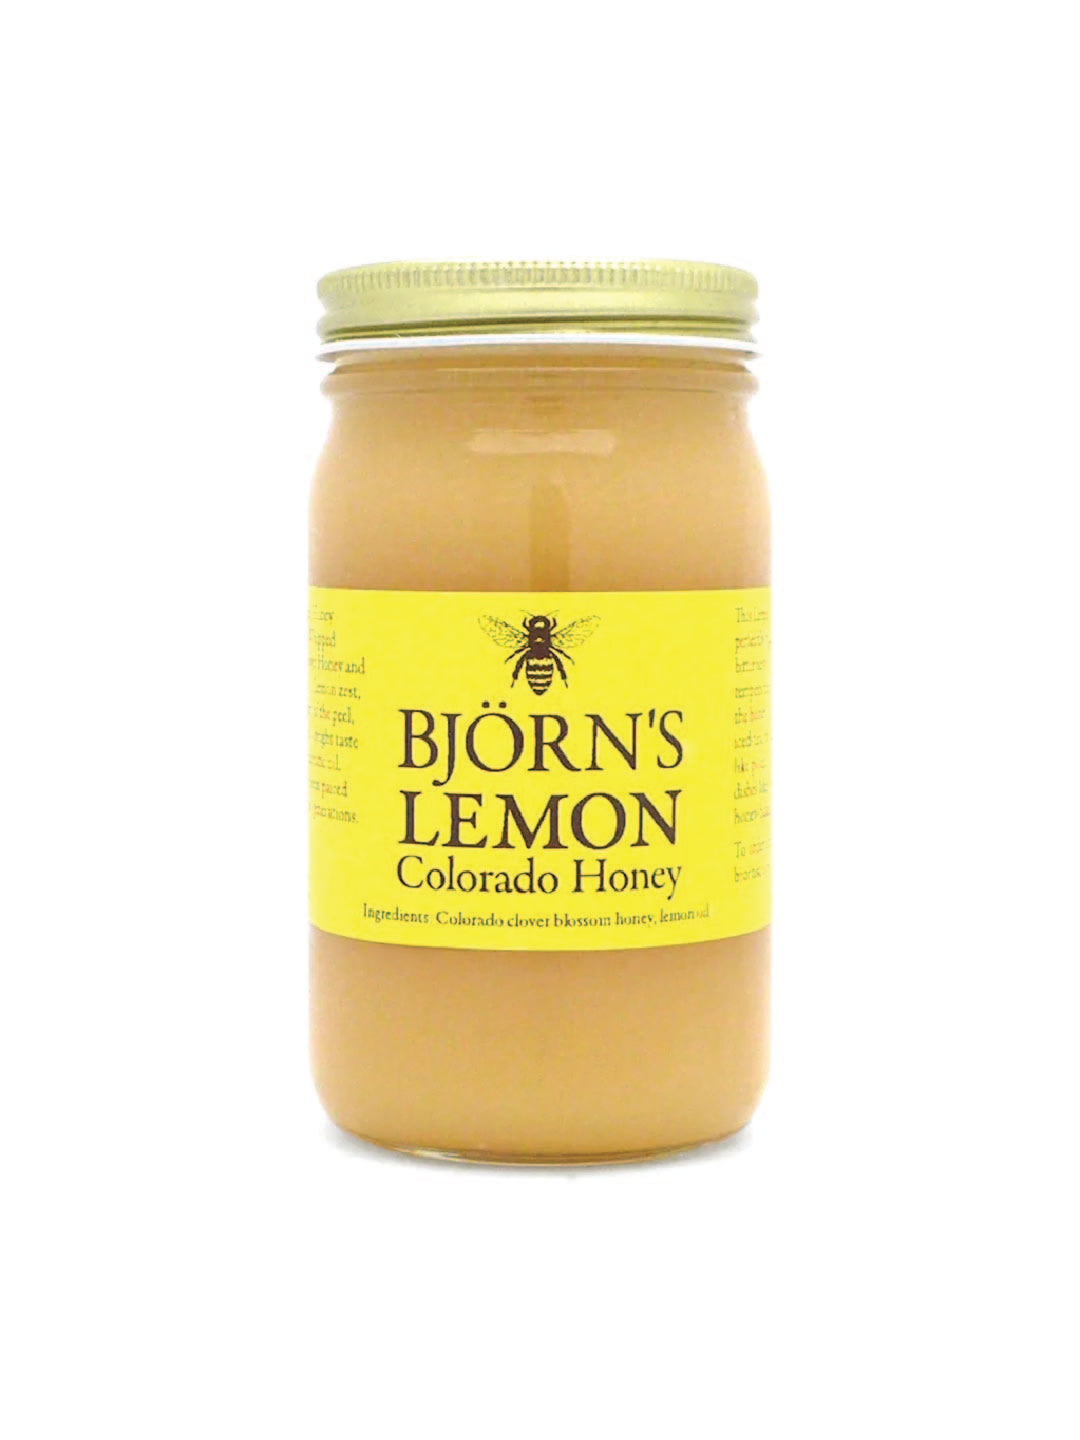 Lemon Honey by Björn's Colorado Honey